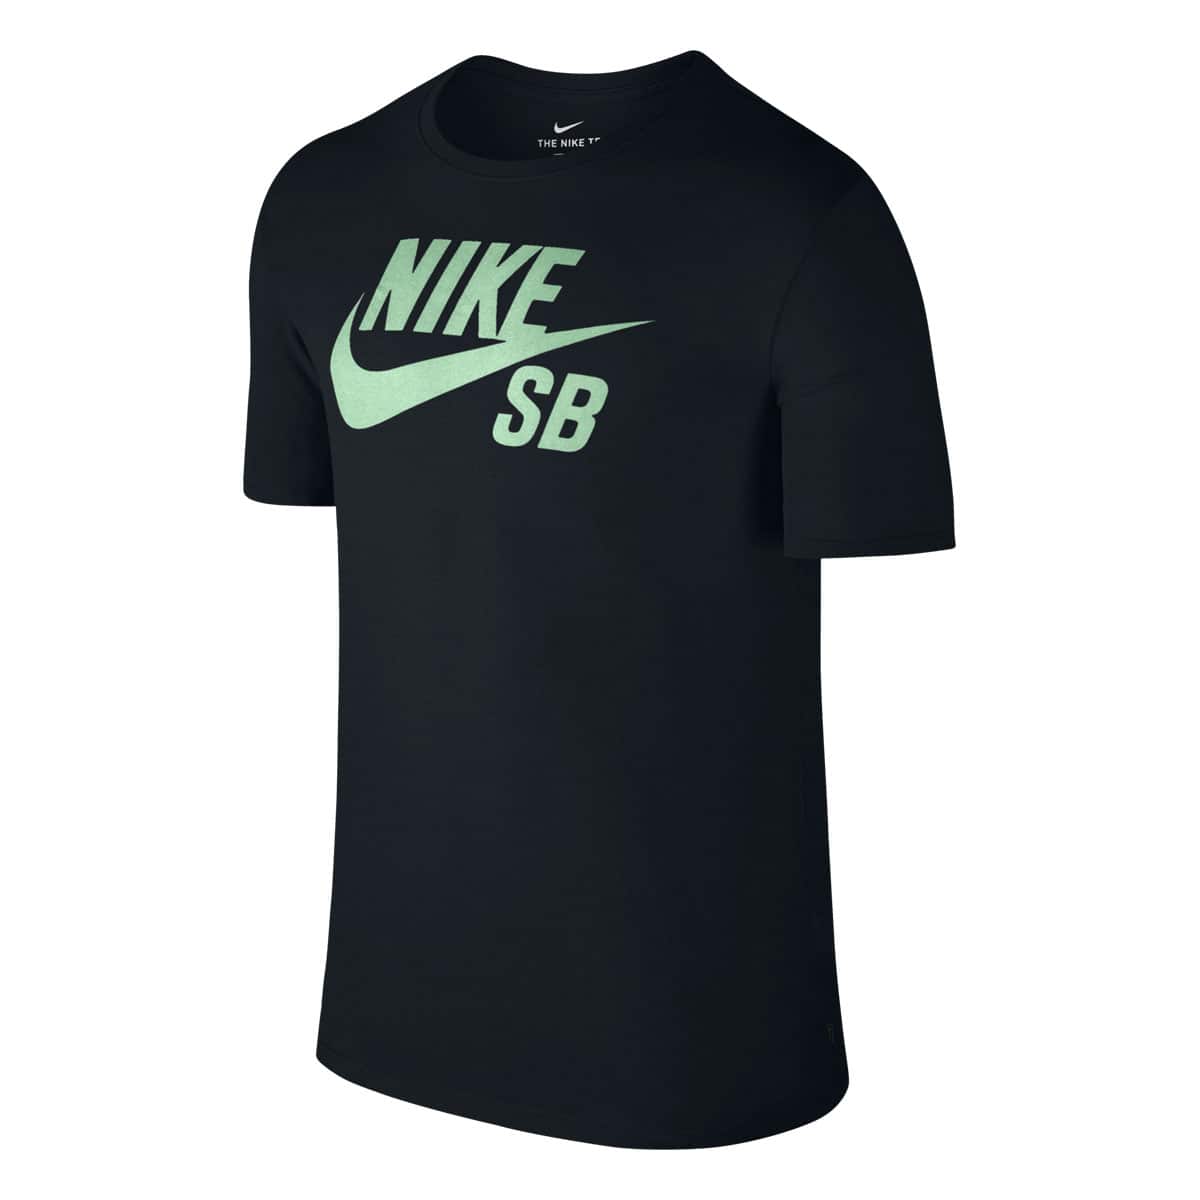 Nike As Sb Logo Tee ナイキ Sb ドライフィット ロゴ Tシャツ Black